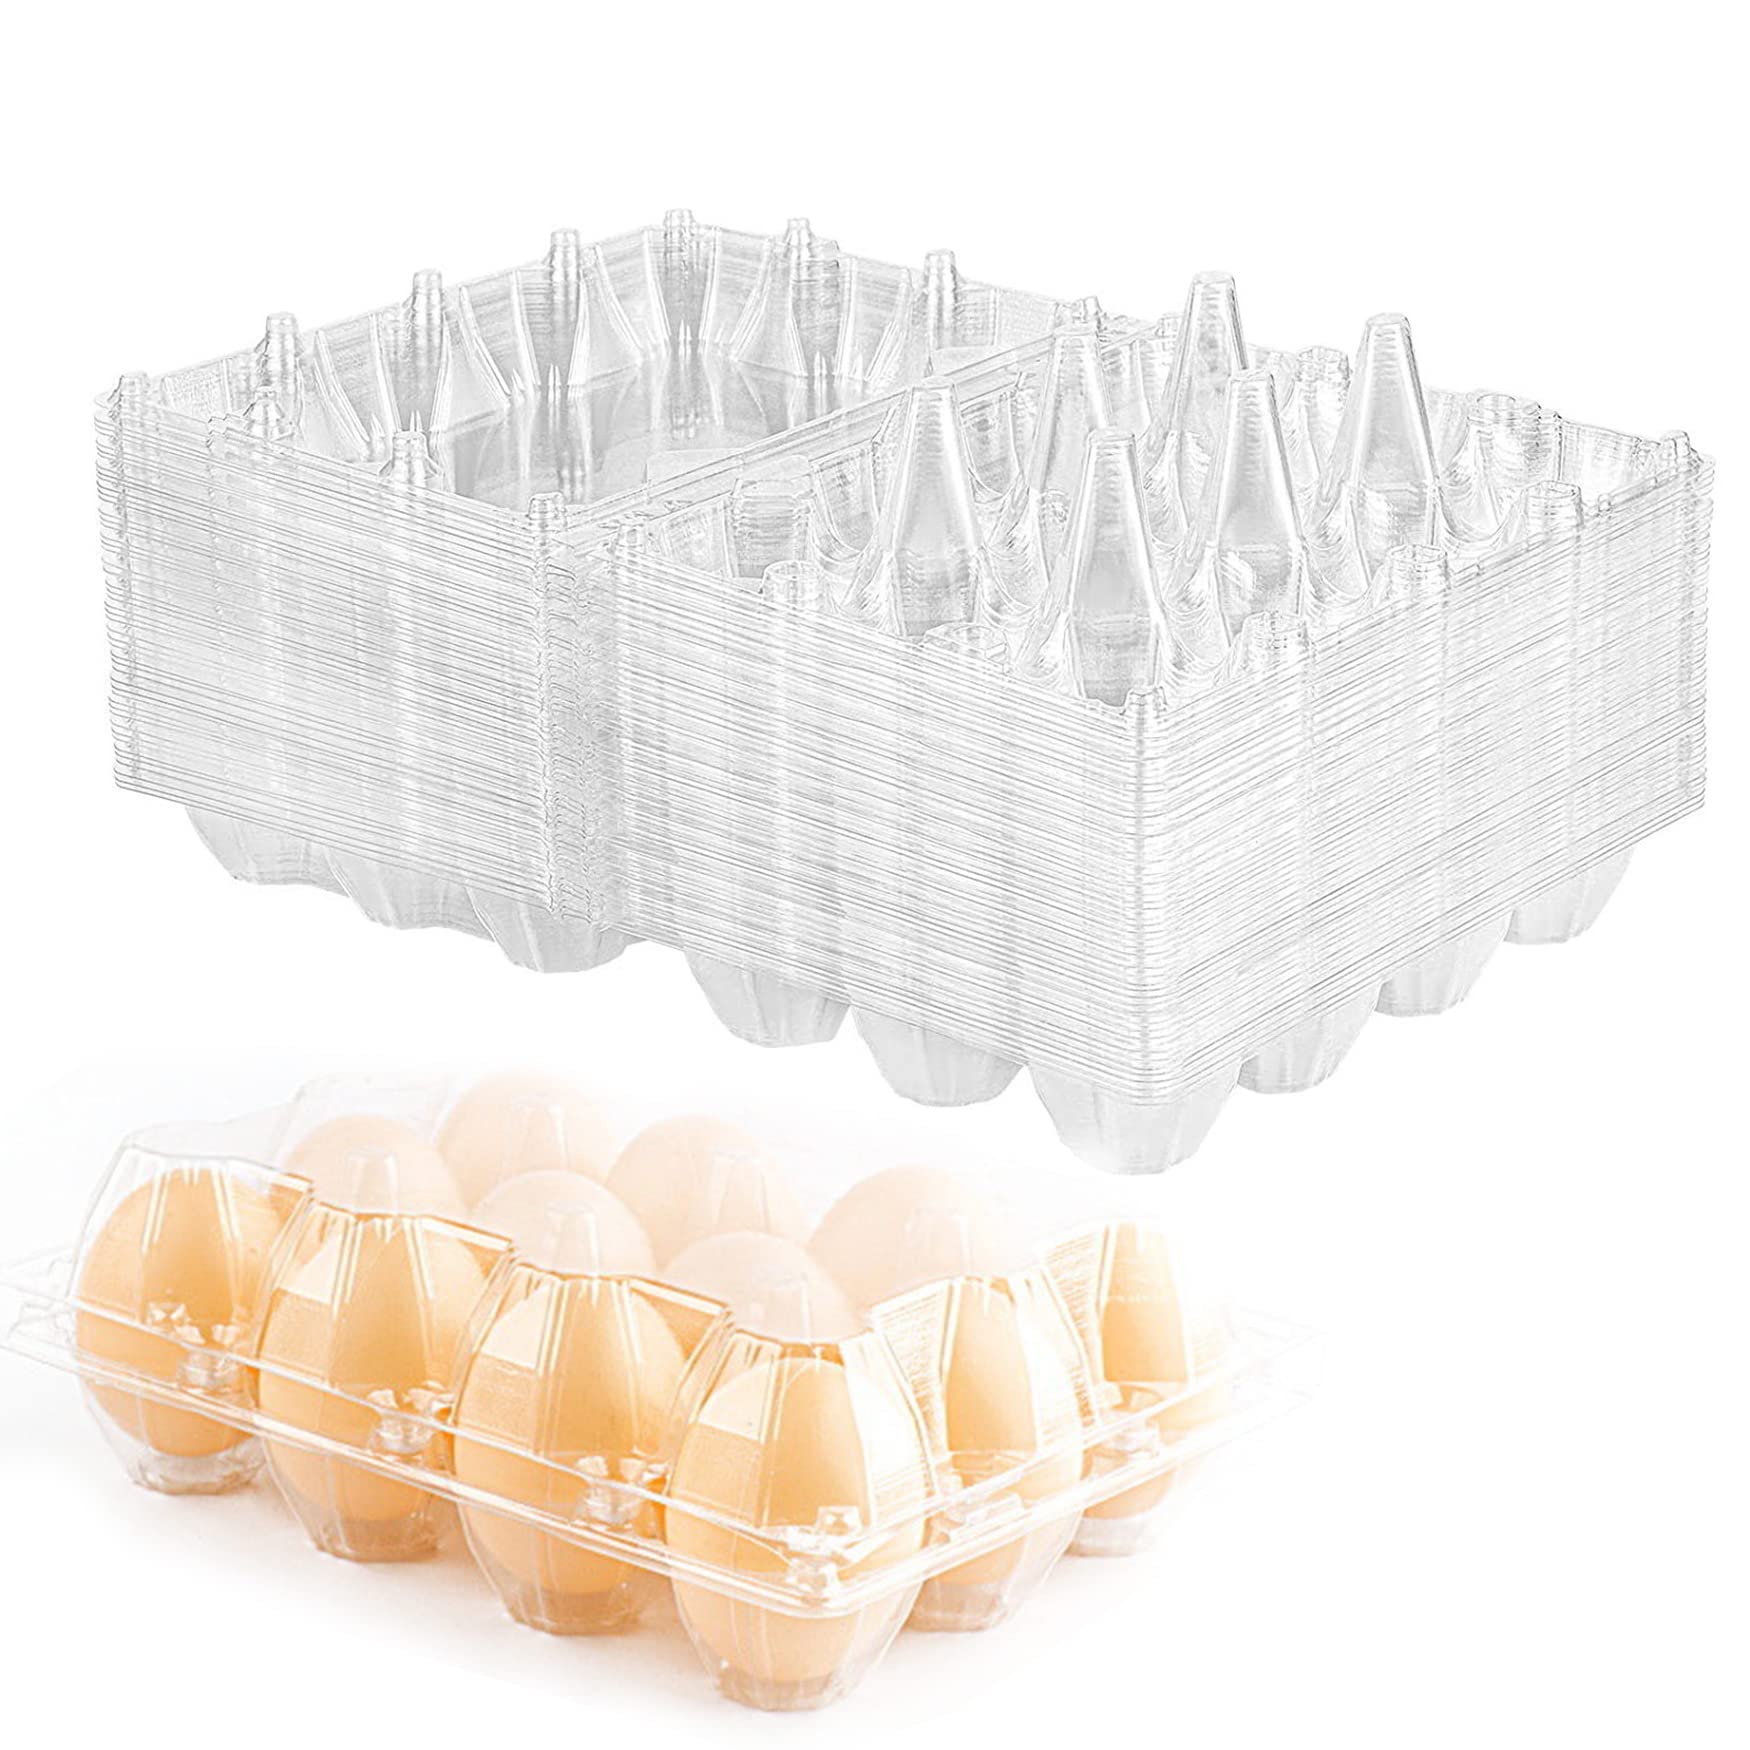 40 Pack Plastic Egg Cartons Cheap Bulk One Dozen Clear Empty Egg Cartons for Chicken Eggs, Reusable Egg Carton for Home Ranch Chicken Farm, Commercial Business Market Display, 2x6 Grids, Medium